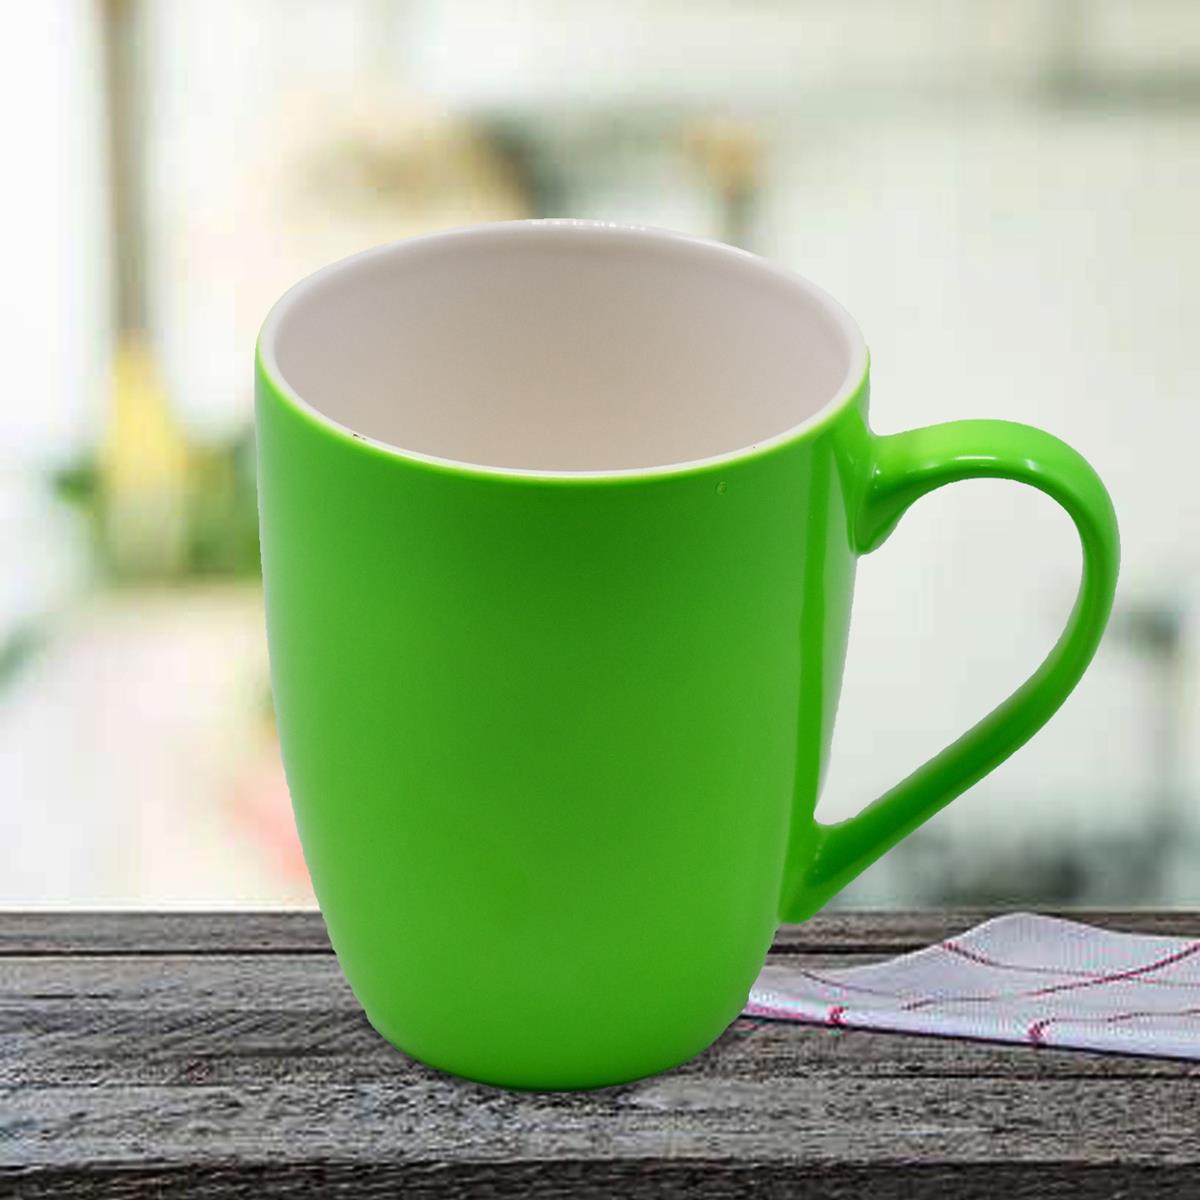 Single Color Ceramic Coffee or Tea Mug with handle - 325ml (BPY001-D)